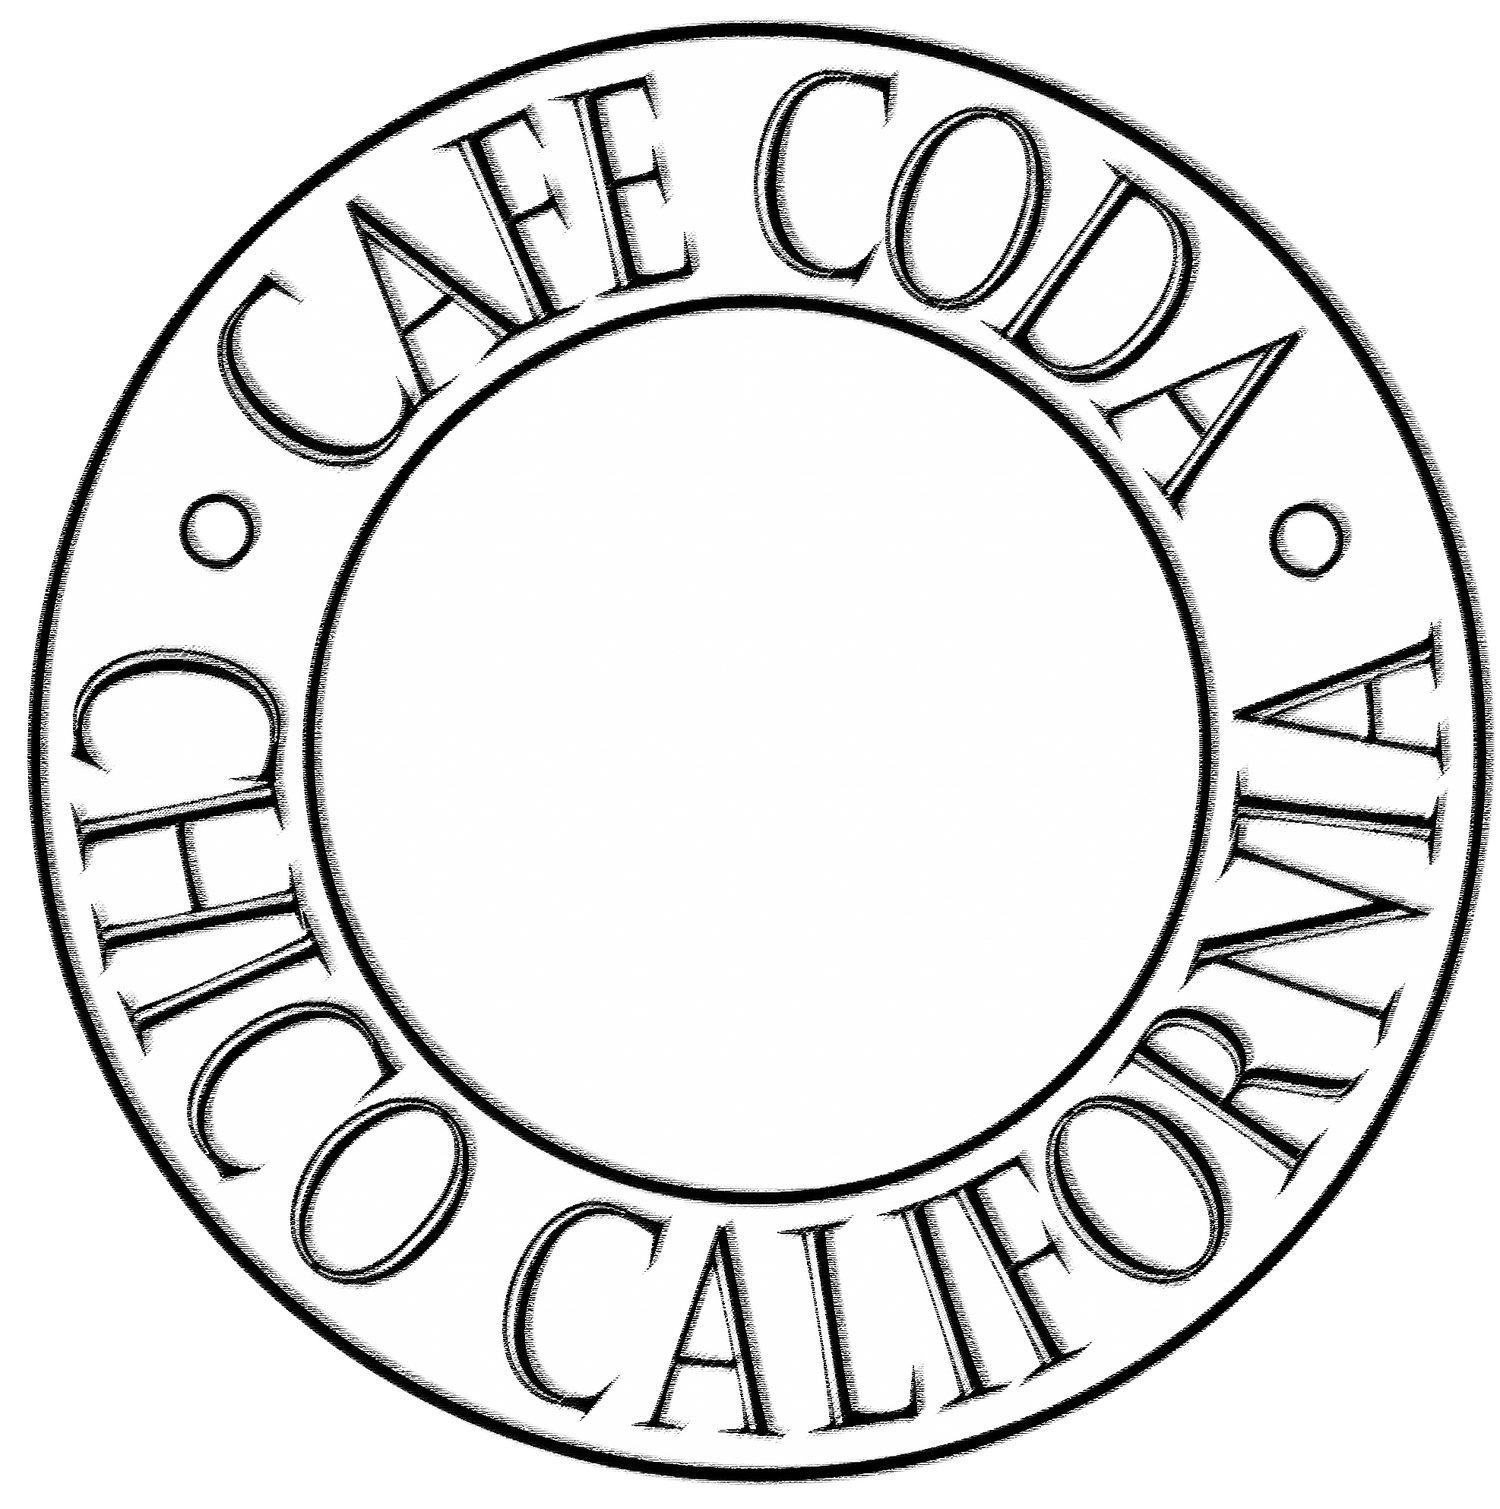 Cafe Coda